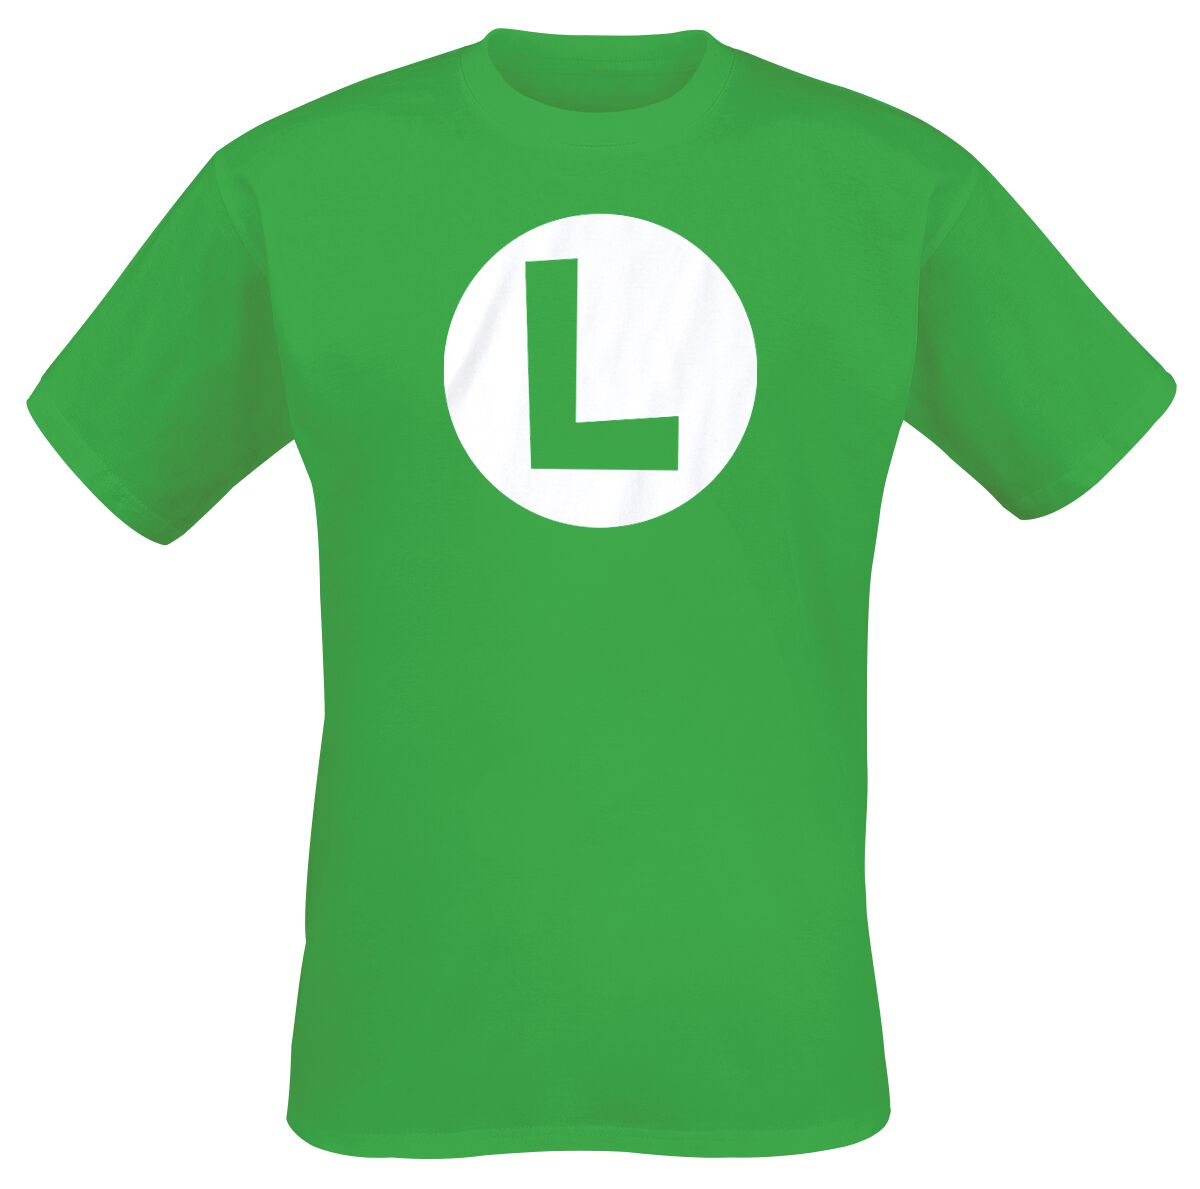 Super Mario Luigi badge T-Shirt green